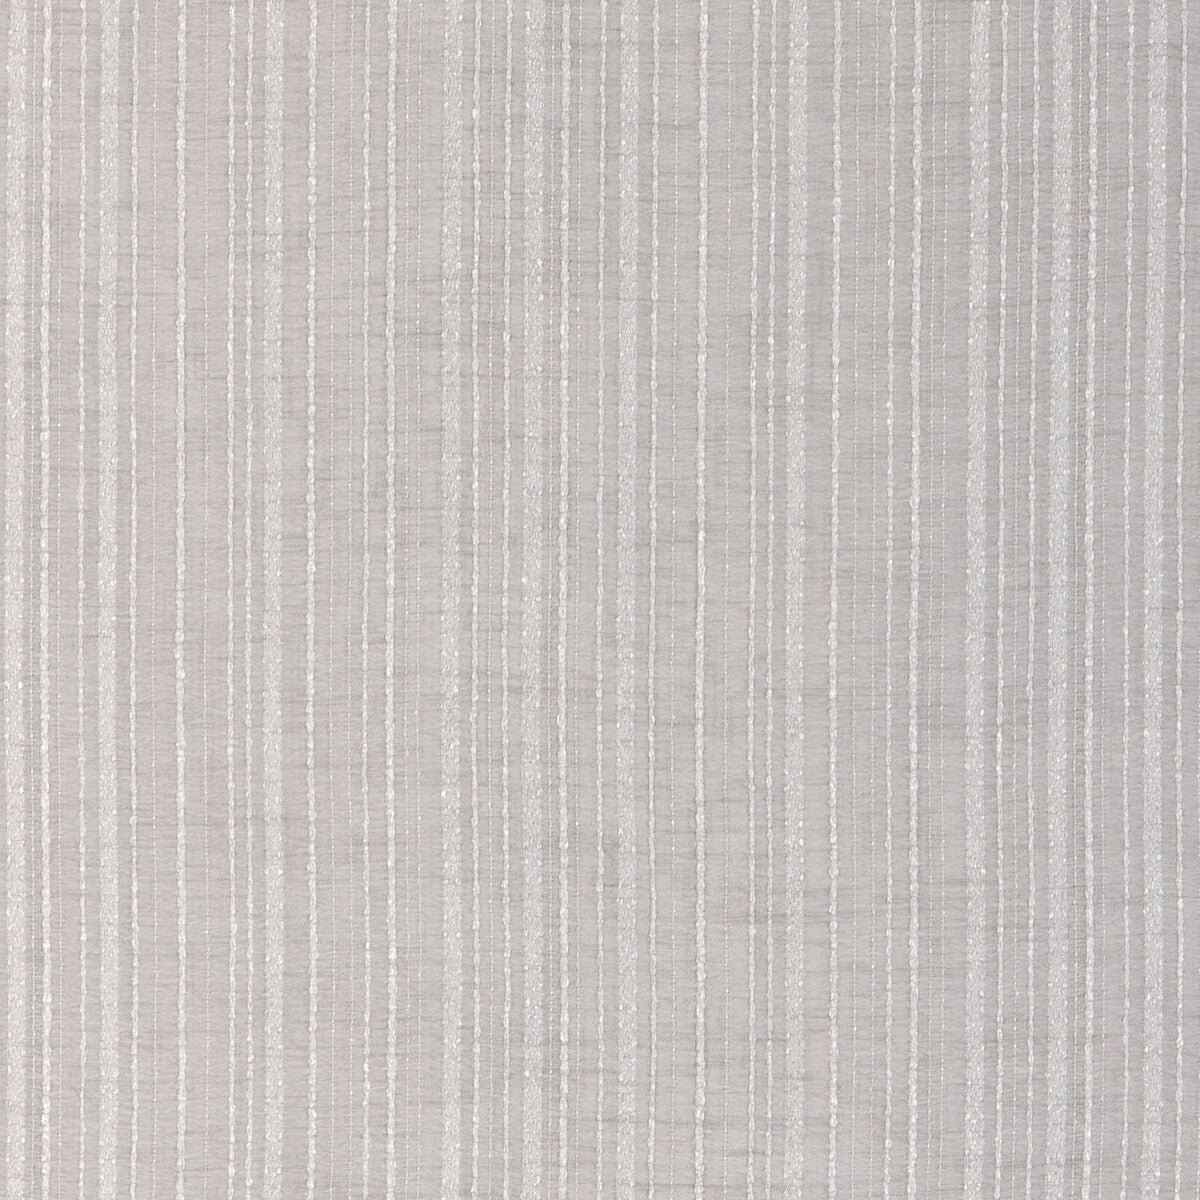 Kravet Basics fabric in 90023-11 color - pattern 90023.11.0 - by Kravet Basics in the Sheer Outlook collection